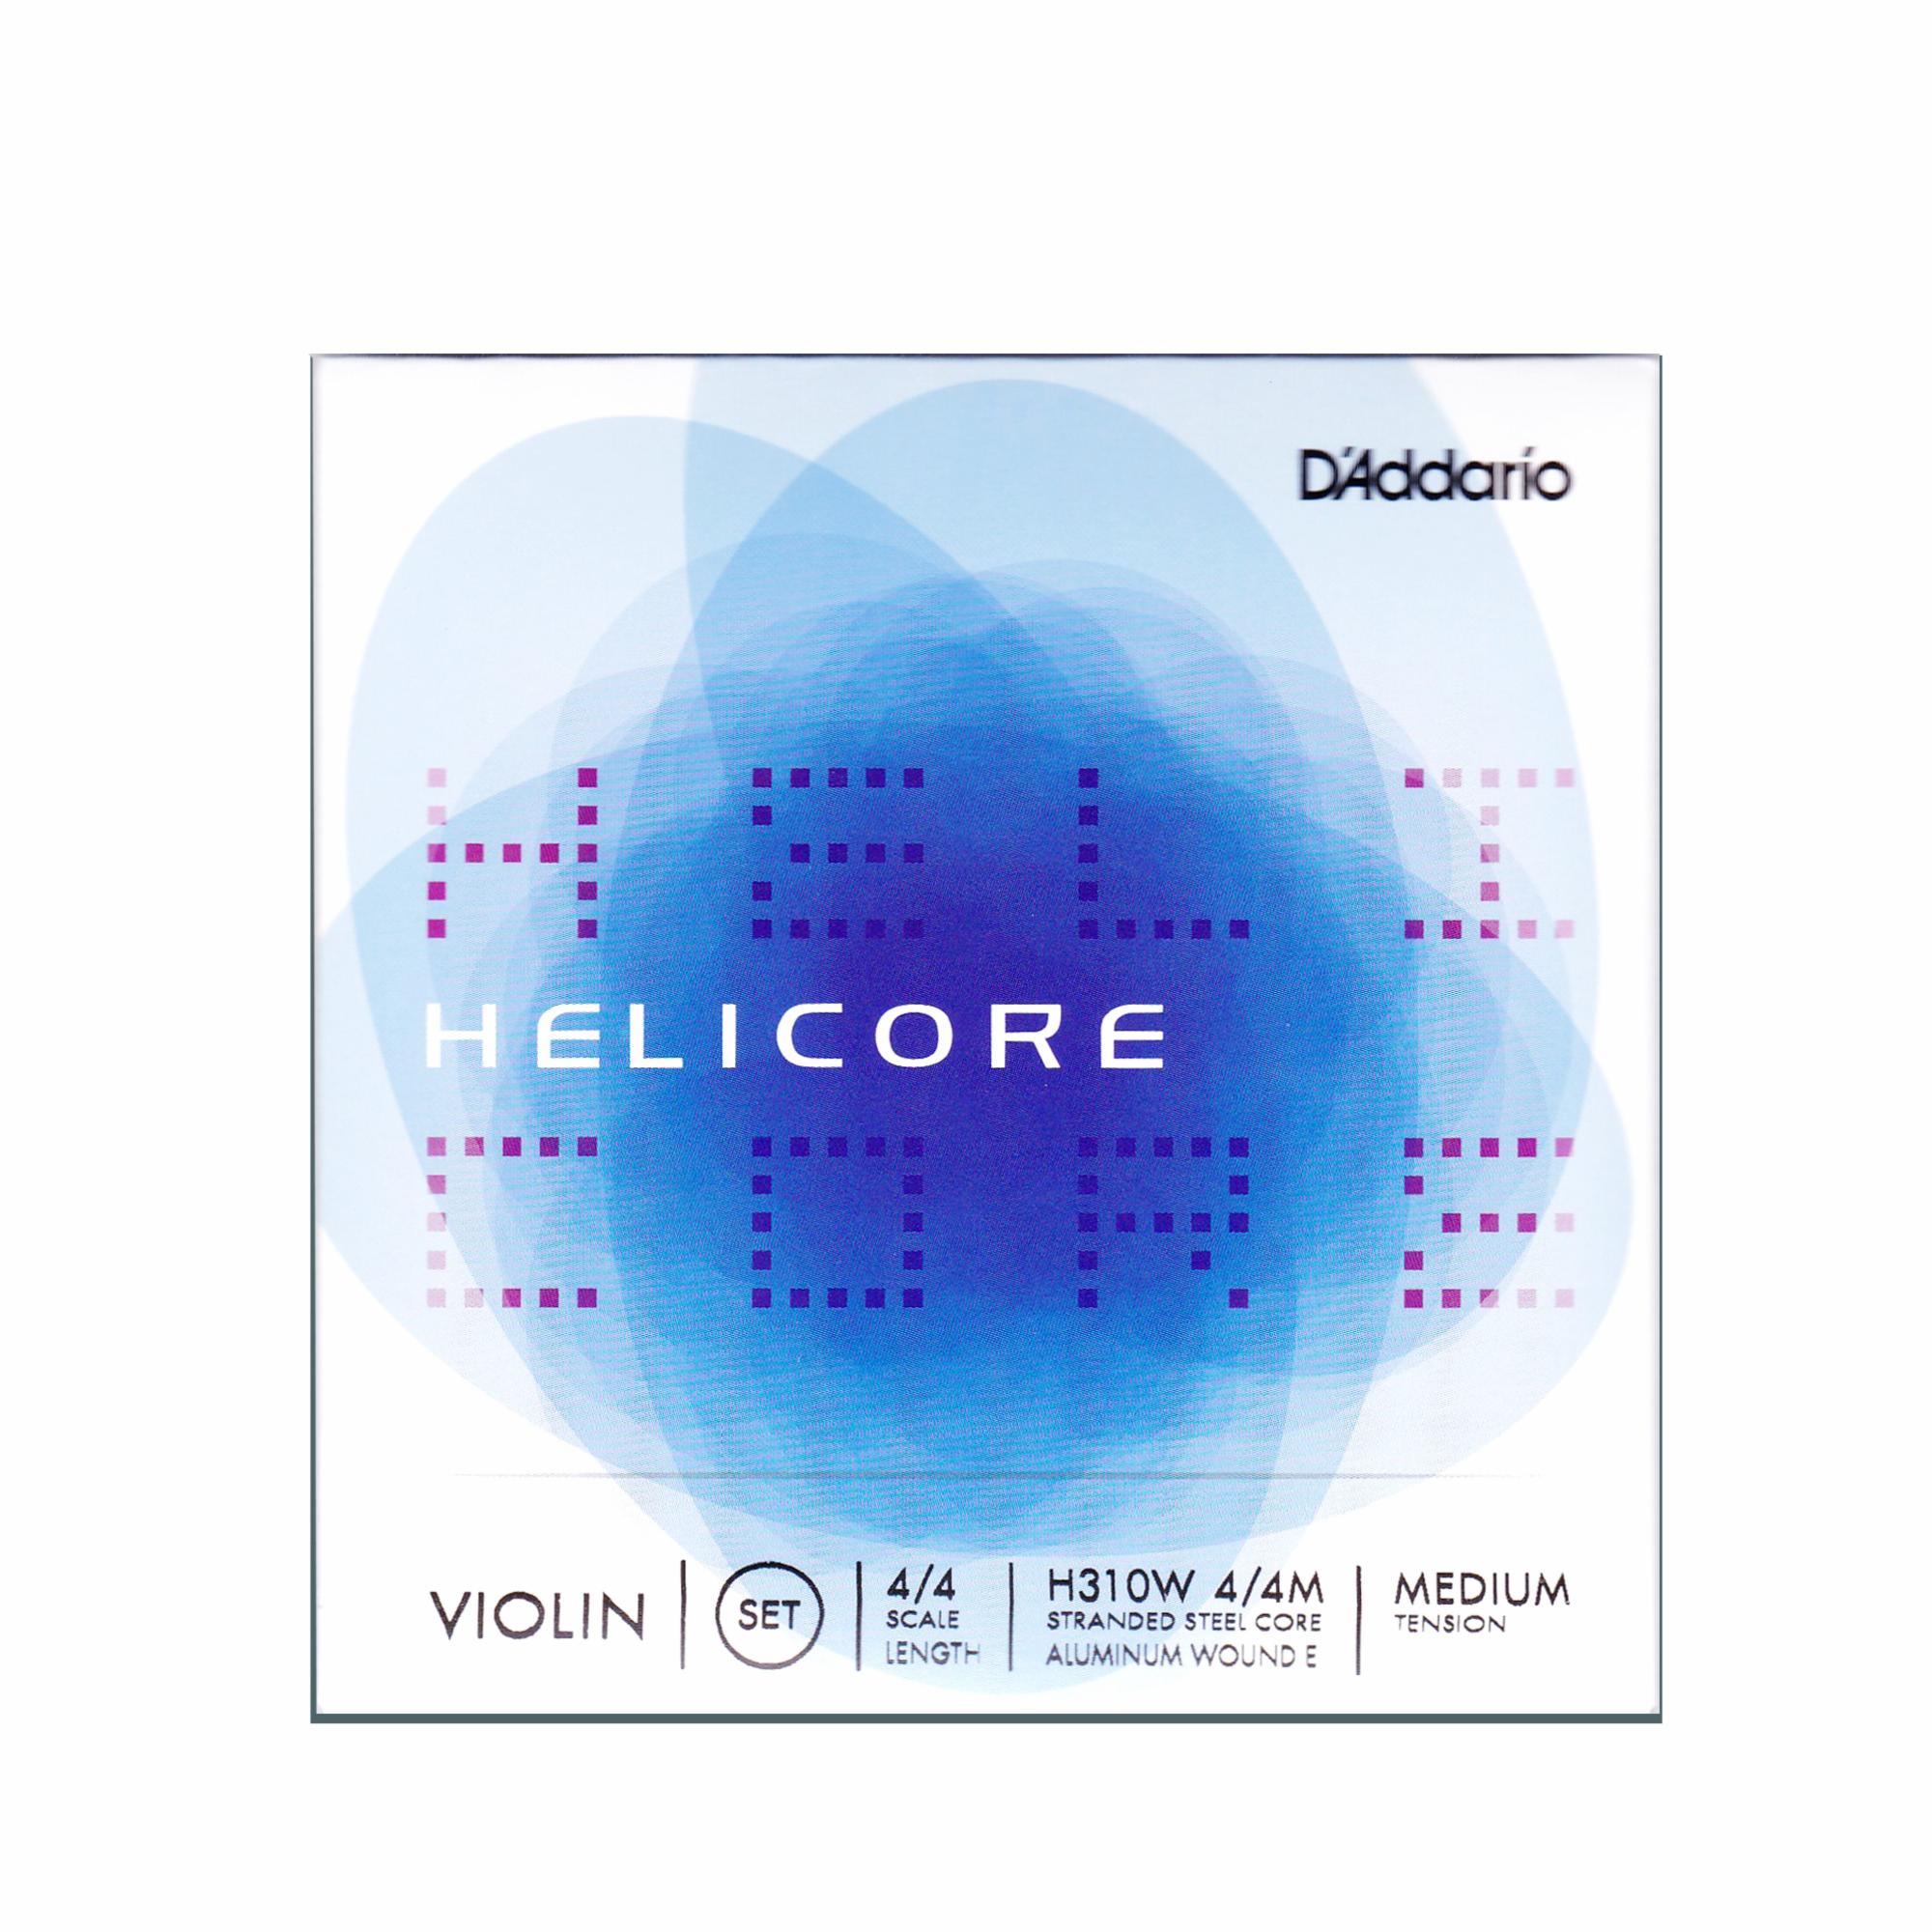 D’Addario Helicore Medium Tension Violin Strings – Wound E Product